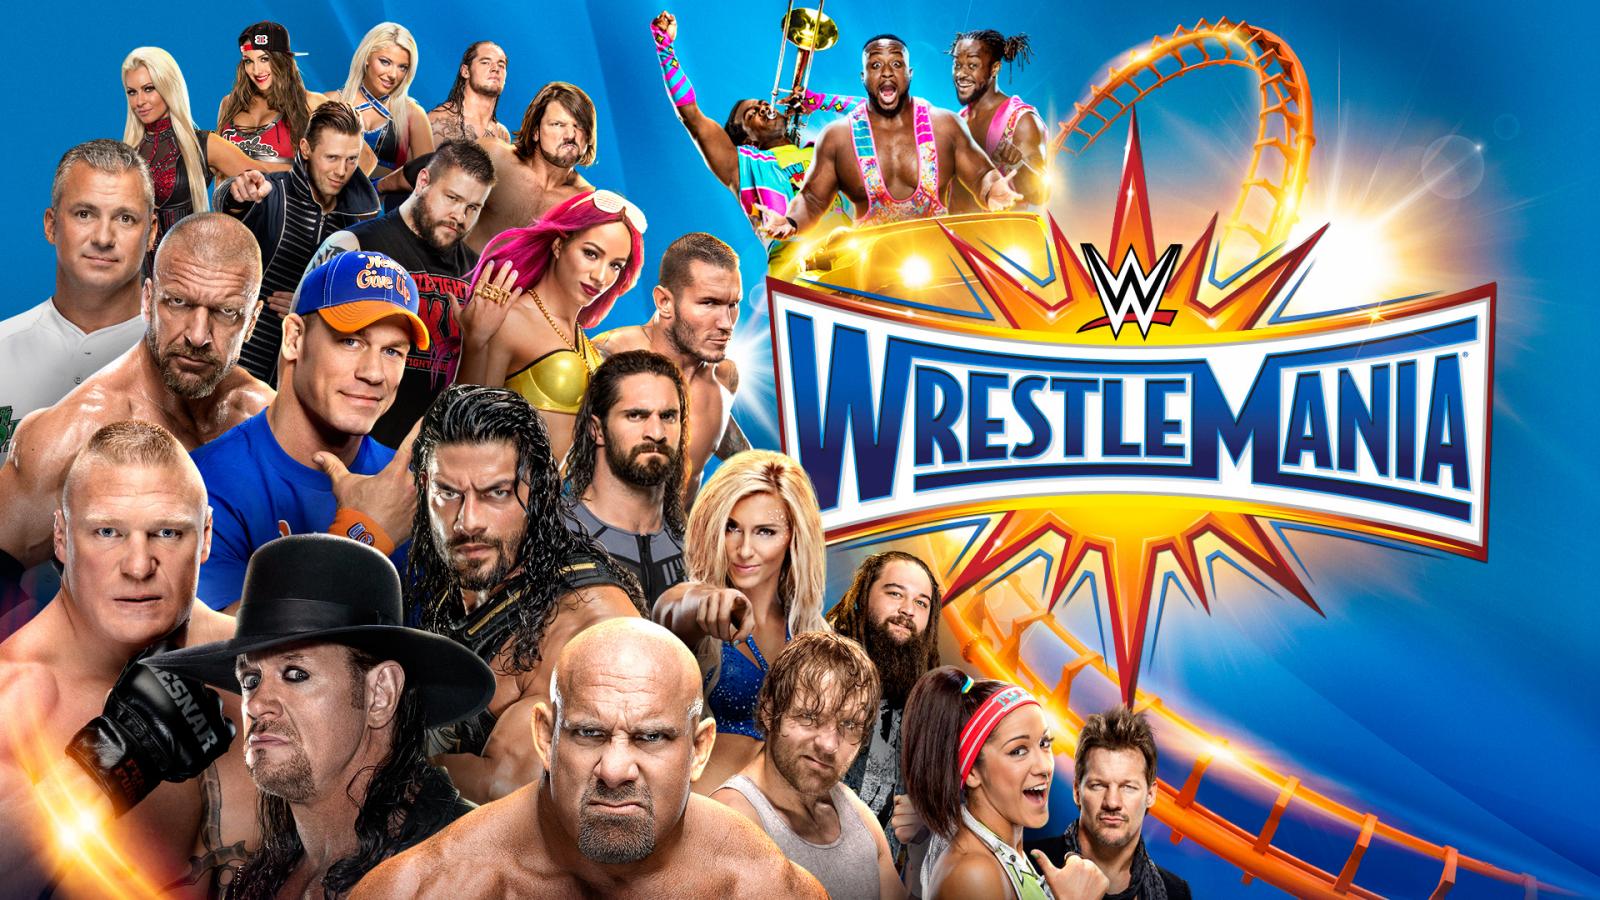 How to Watch WWE WrestleMania 33 Free Live Stream Online Heavy